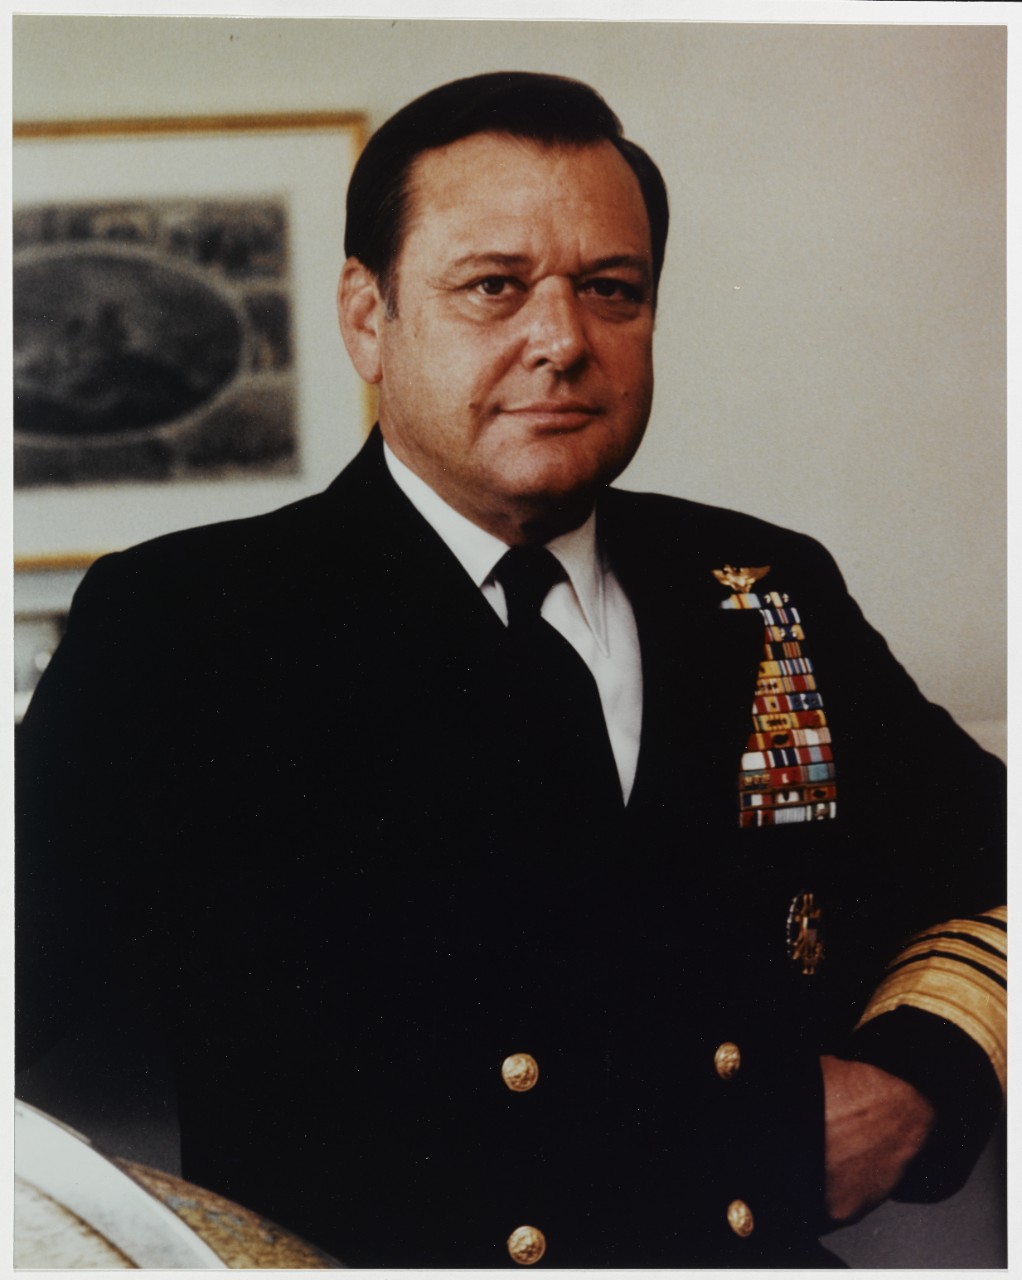 Photo #: NH 95055-KN Admiral James L. Holloway, III, USN